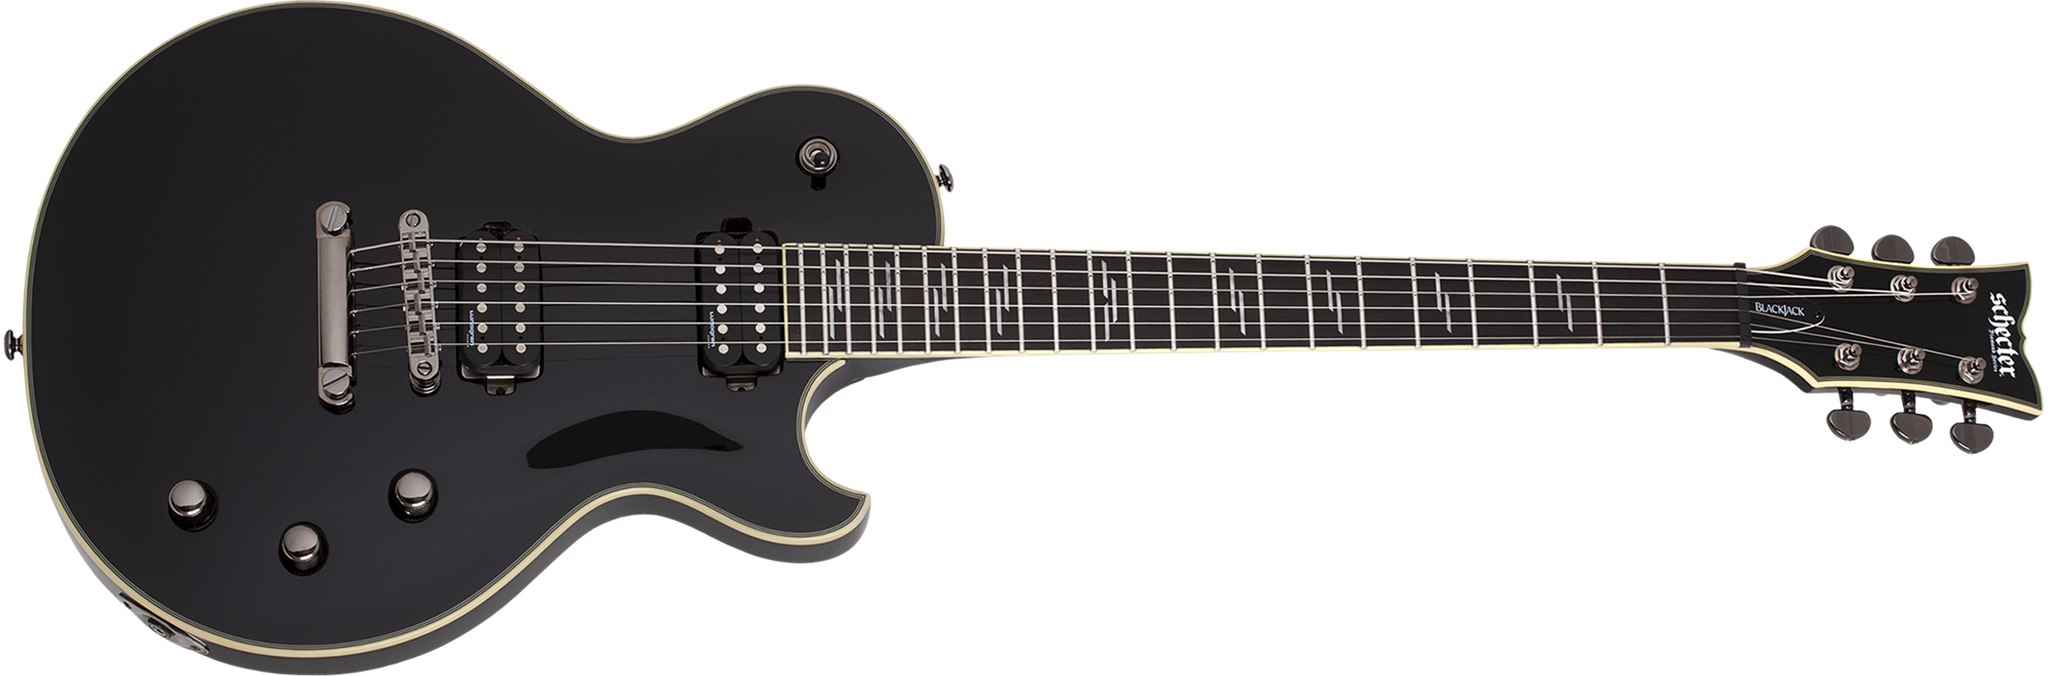 Schecter DIAMOND SERIES   Solo-II Blackjack Gloss Black  6-String Electric Guitar  